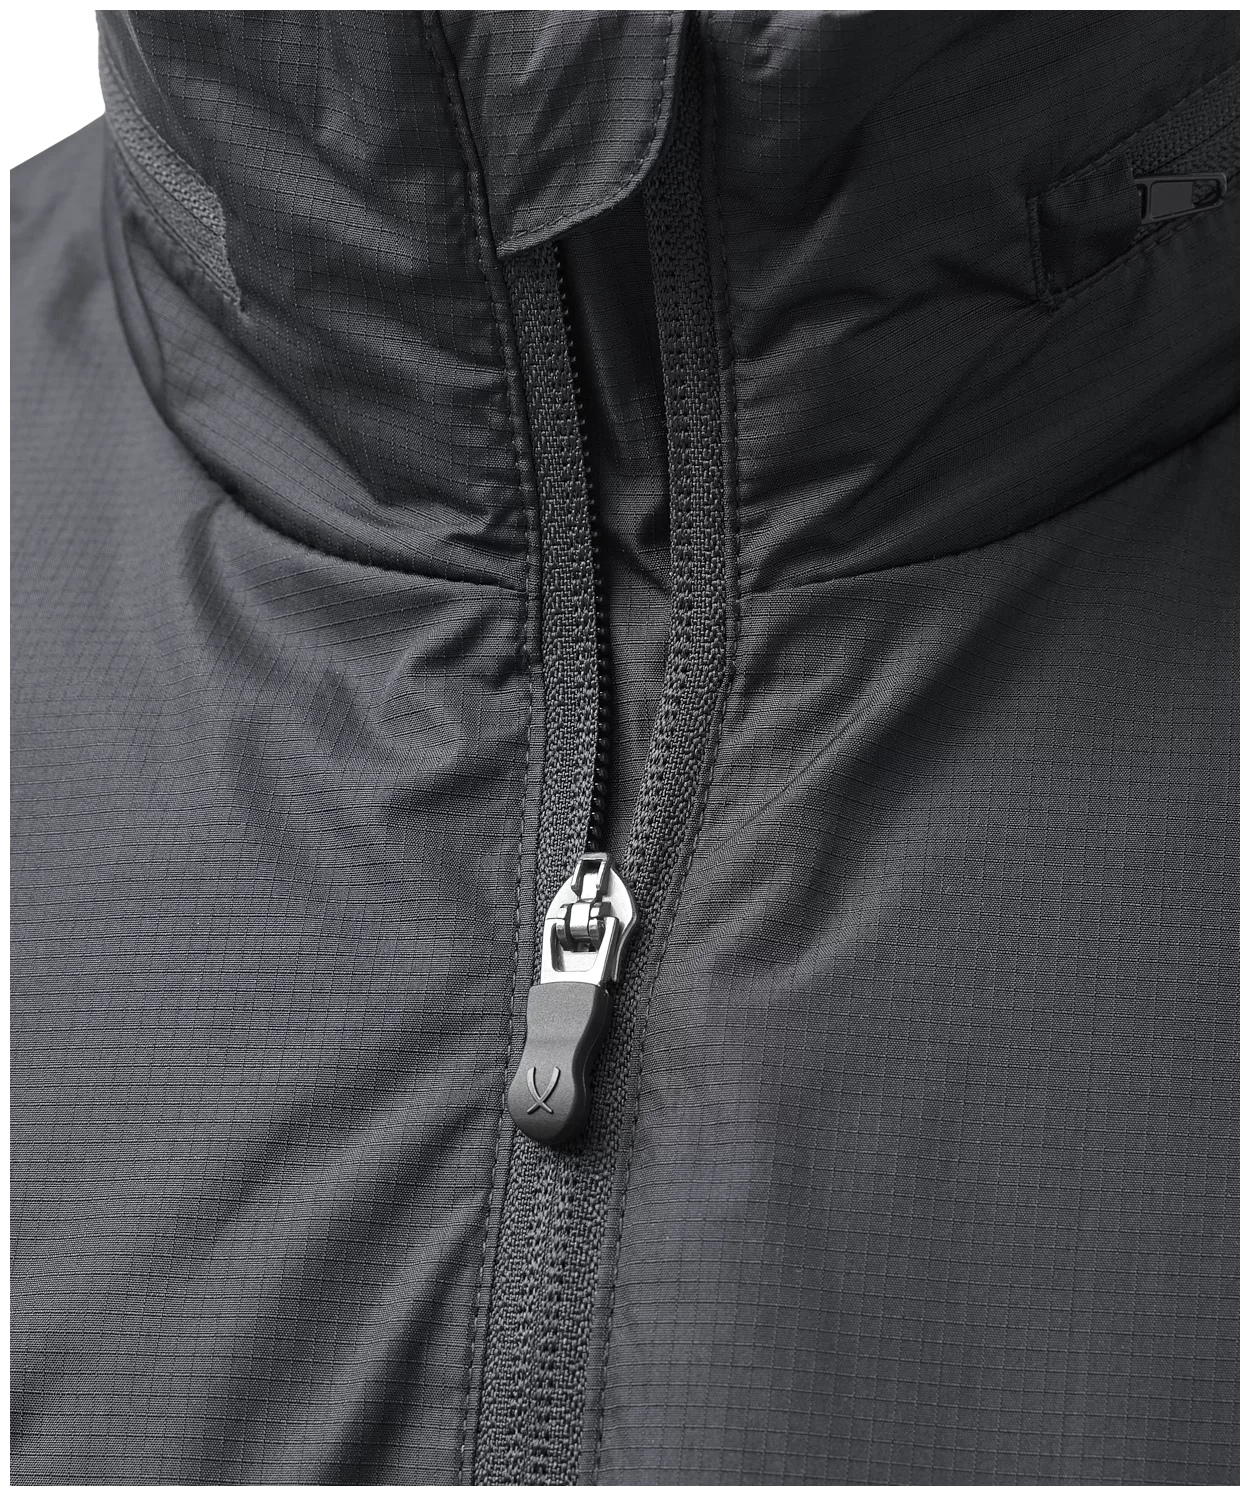 Фото Куртка ветрозащитная Jogel Division PerFormPROOF Shower Jacket JD1WB0121.99, черный 20953 со склада магазина СпортЕВ